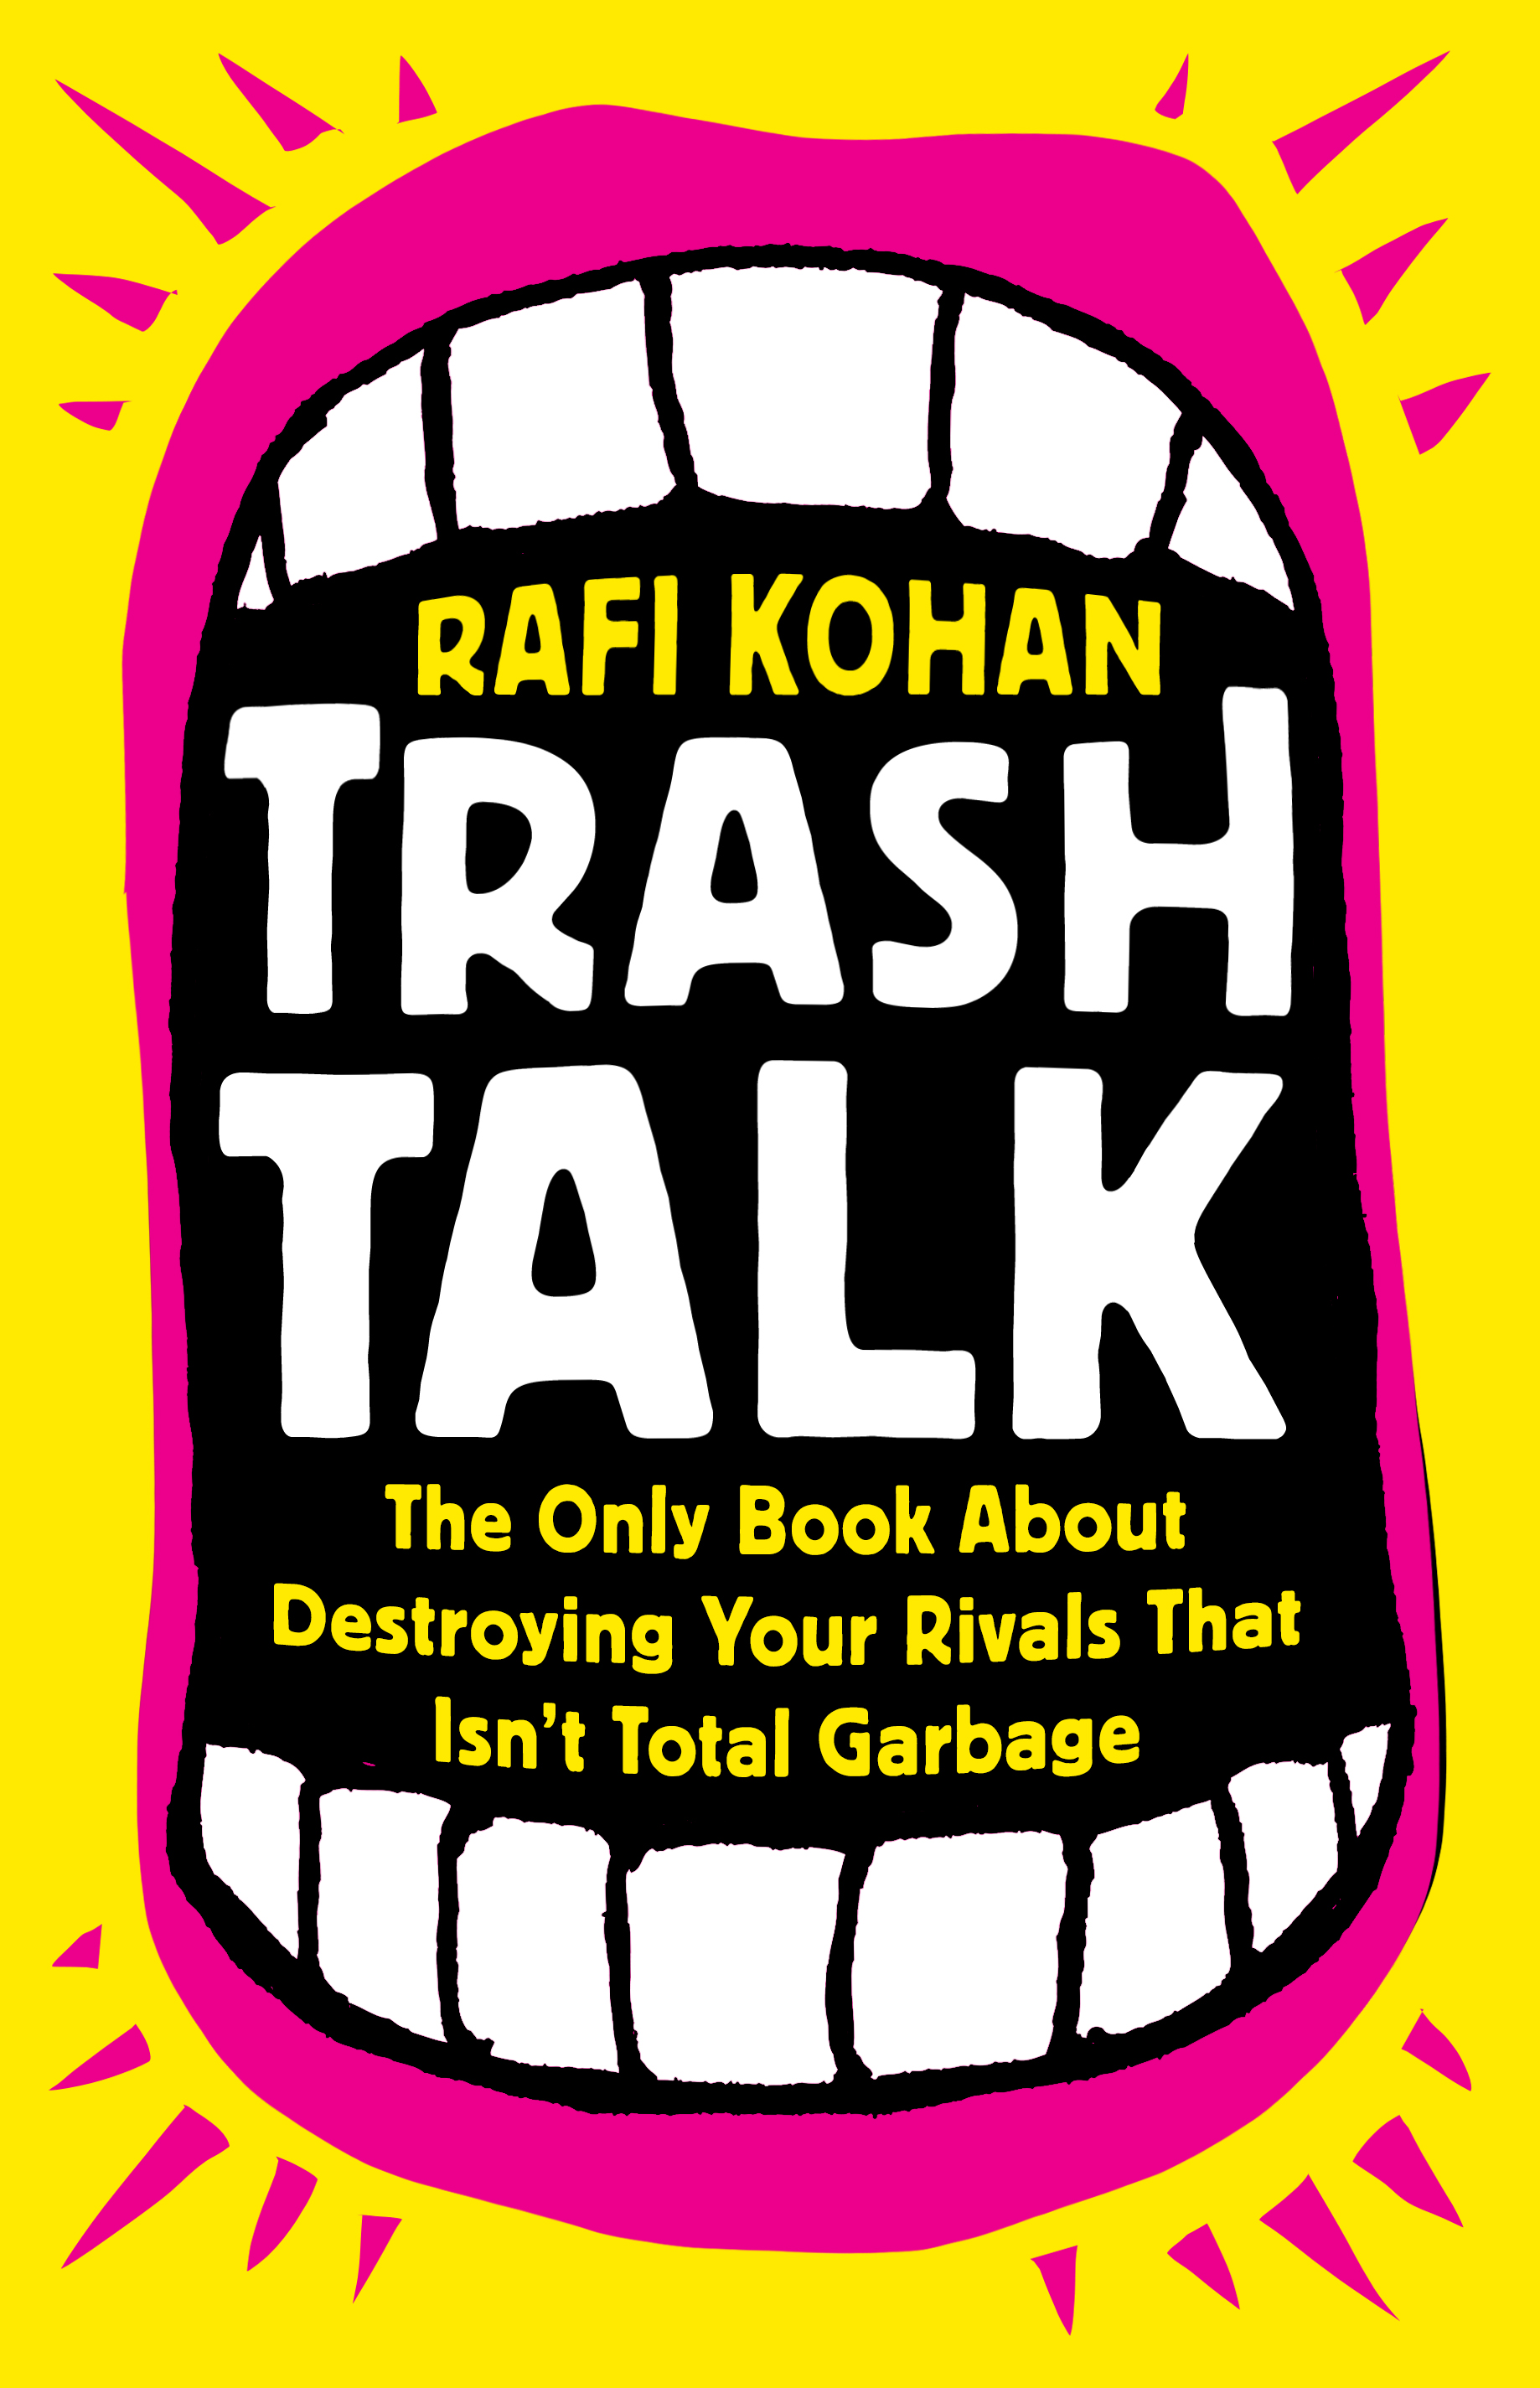 Top 5 trash talkers in NBA history